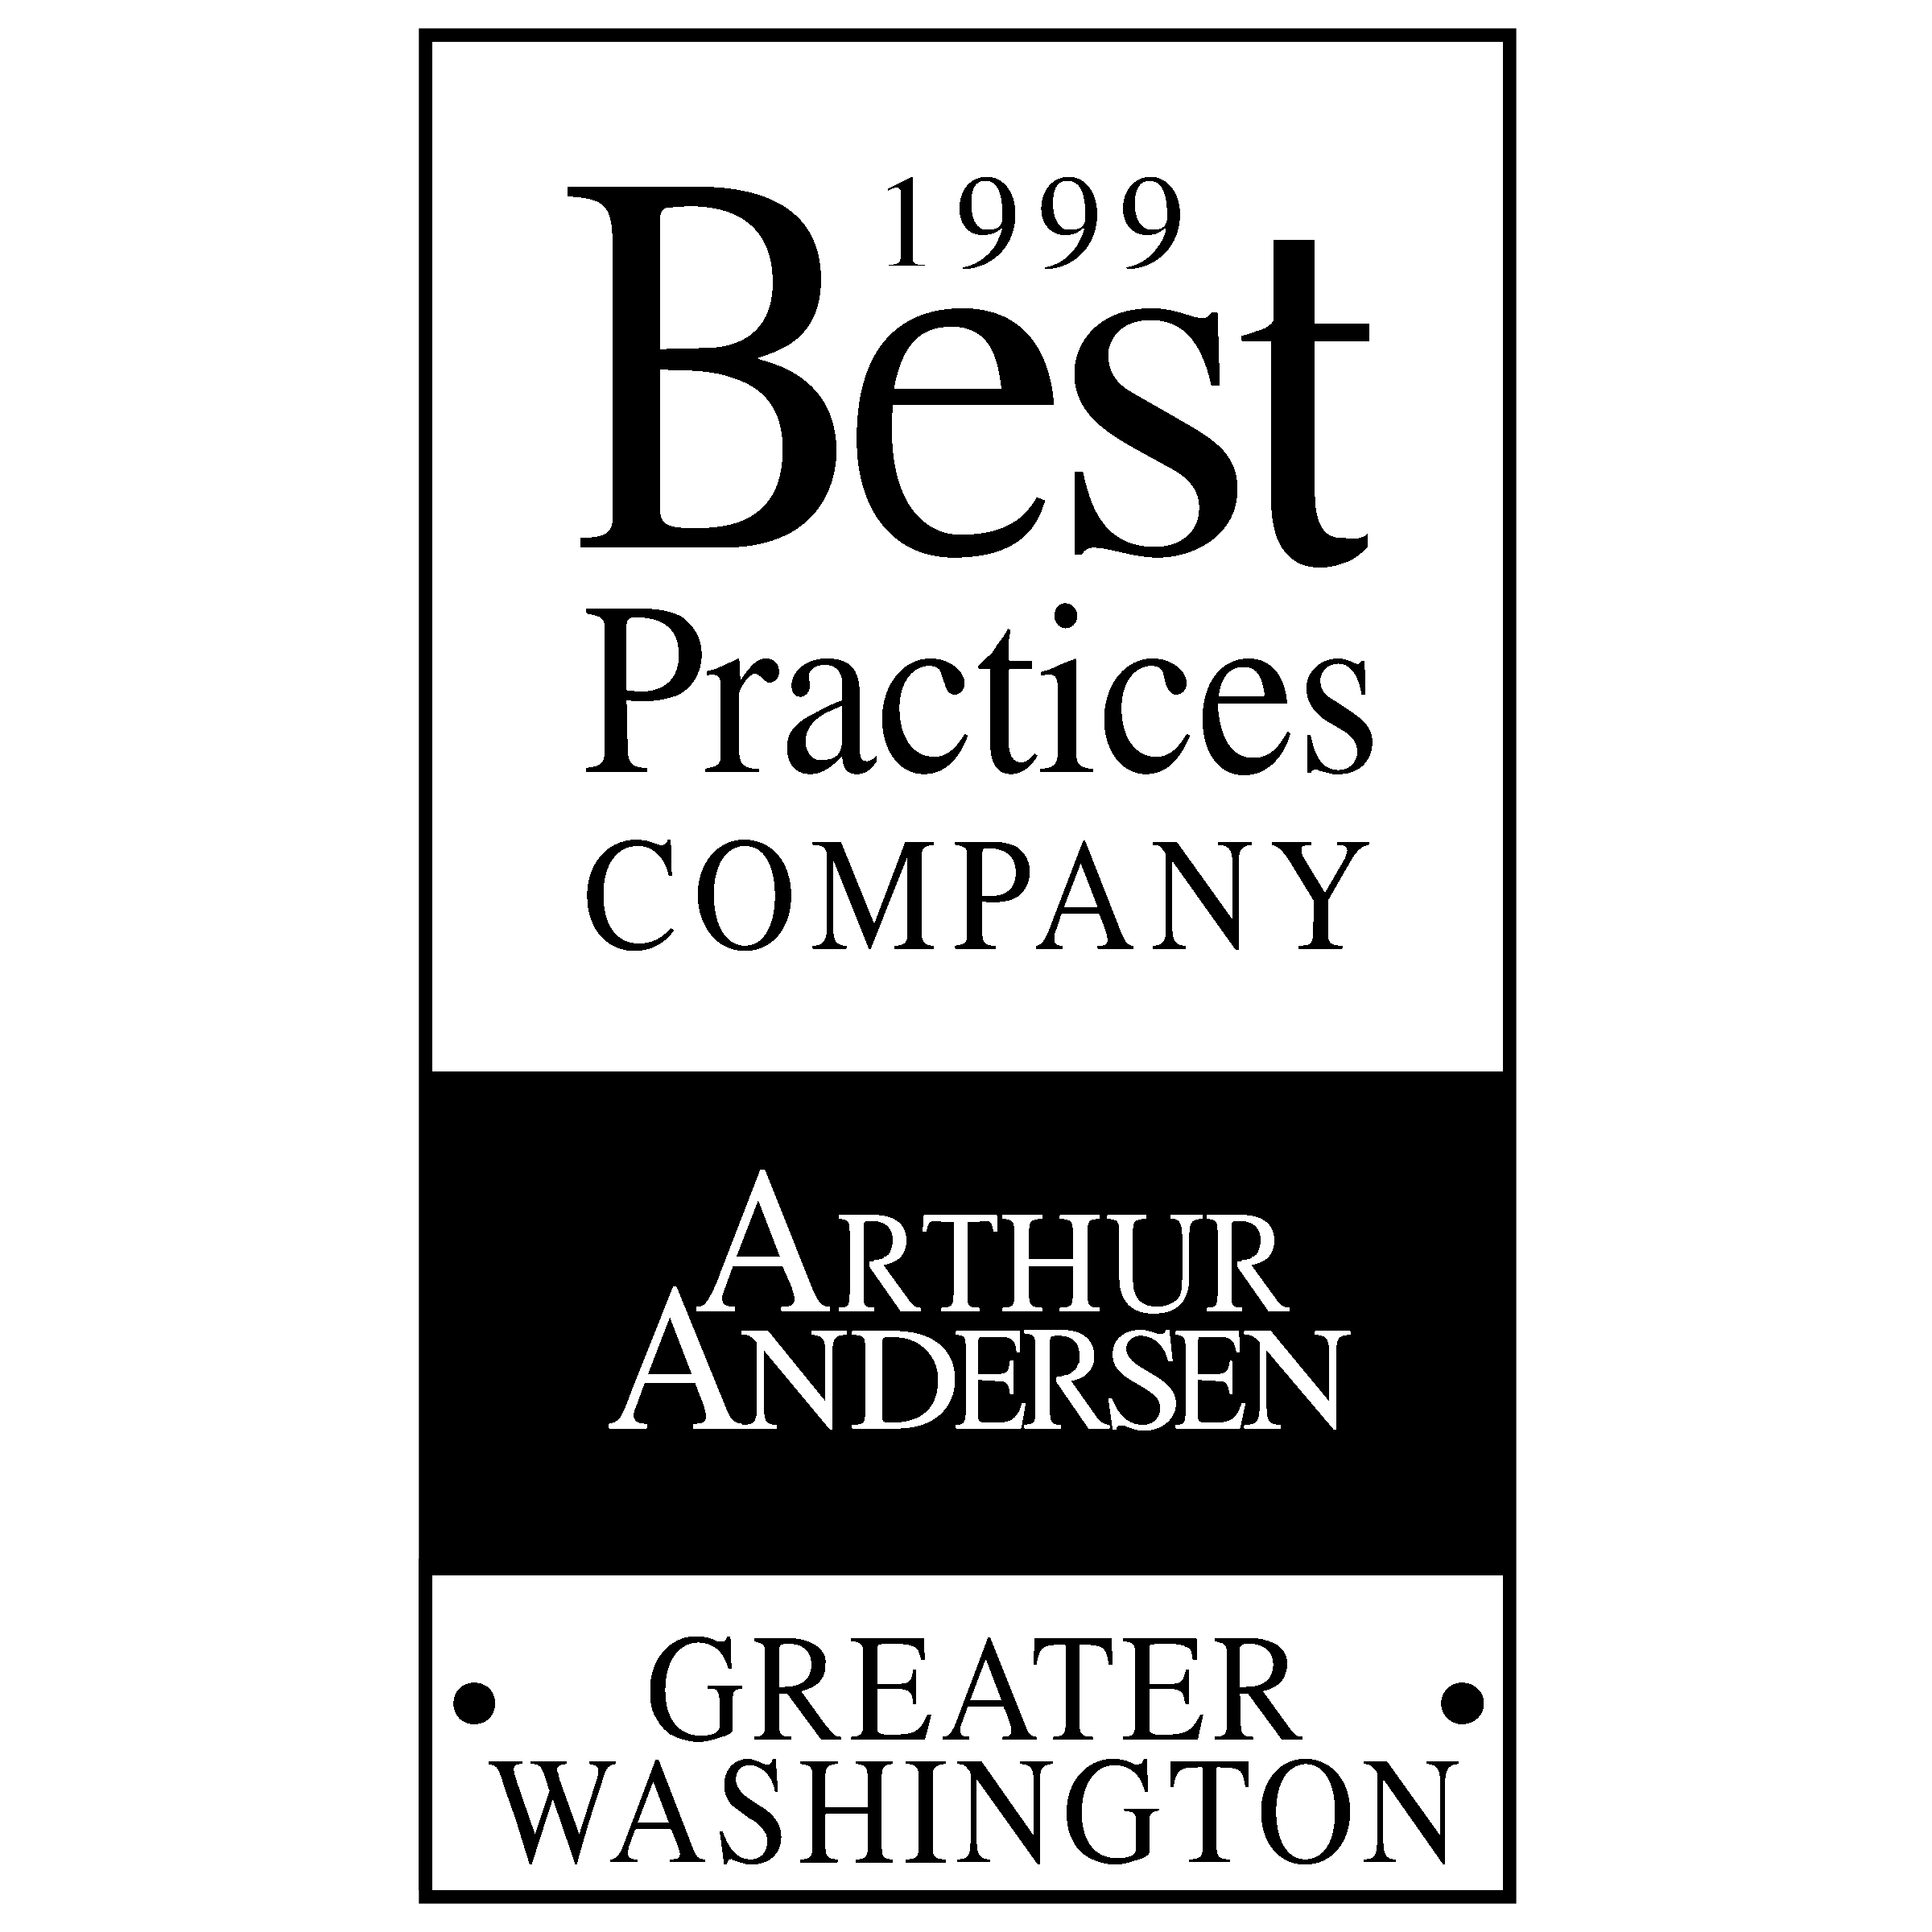 Arthur Andersen Logo - Best Practices Company Arthur Andersen Logo PNG Transparent & SVG ...